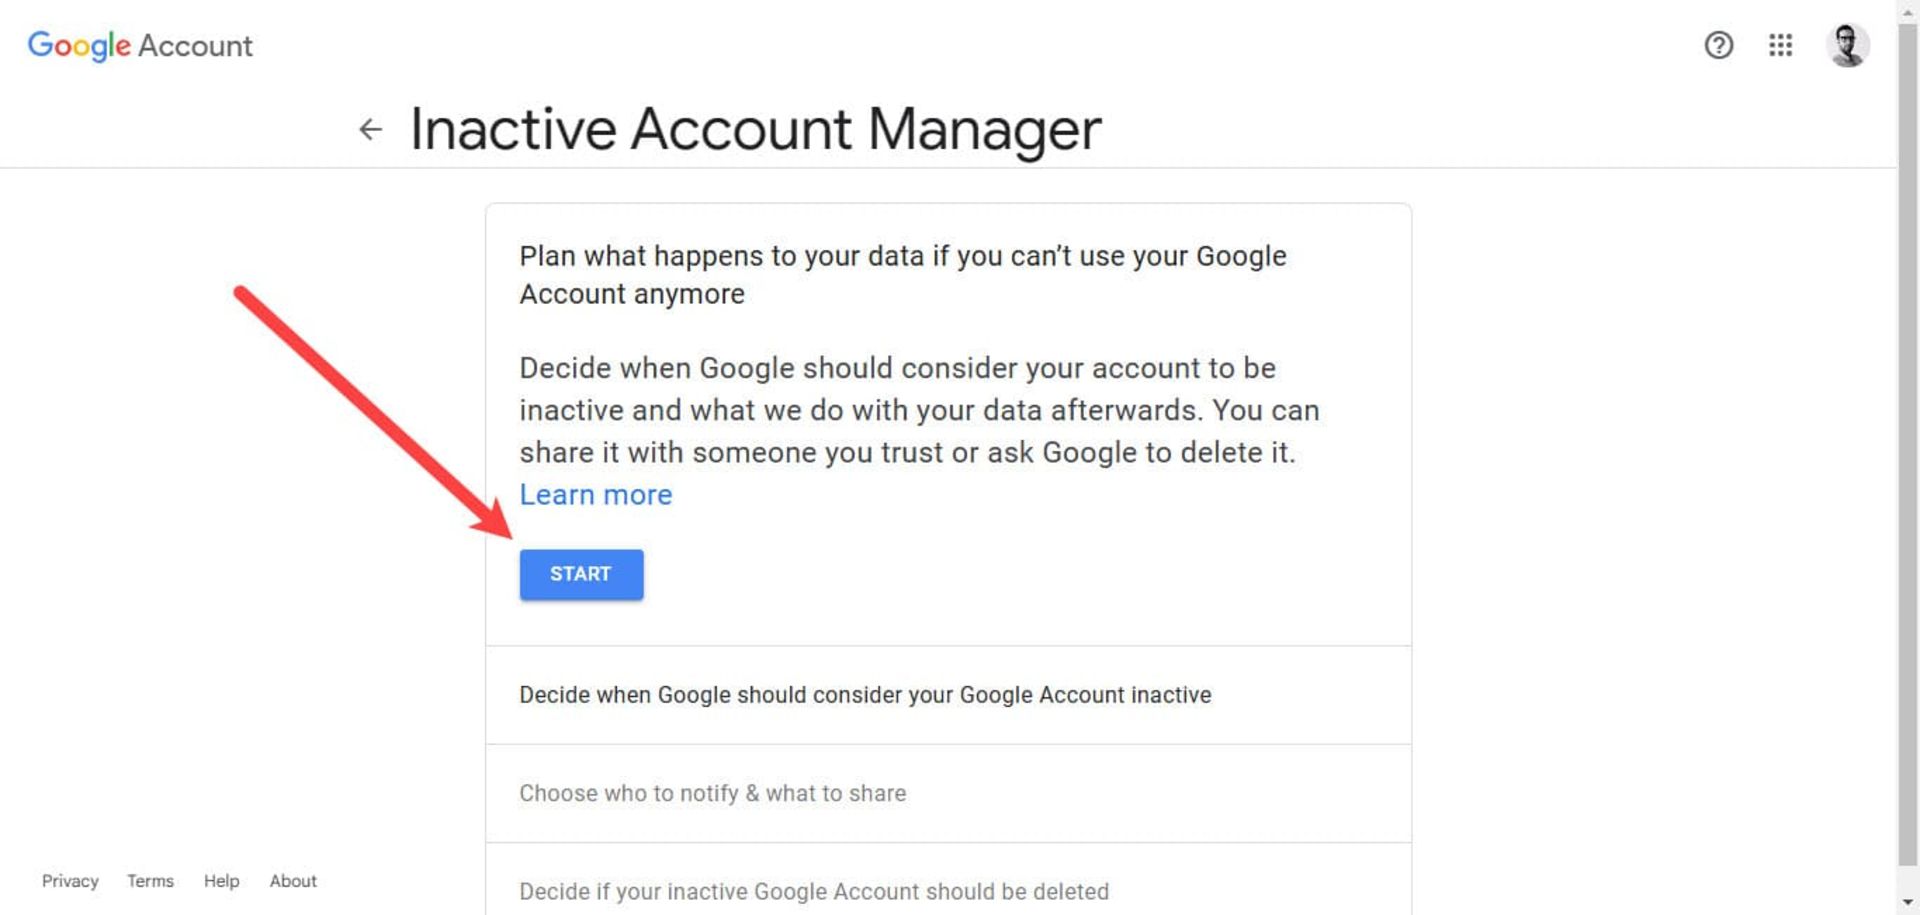 روشن کردن قابلیت Inactive Account Manager حساب گوگل